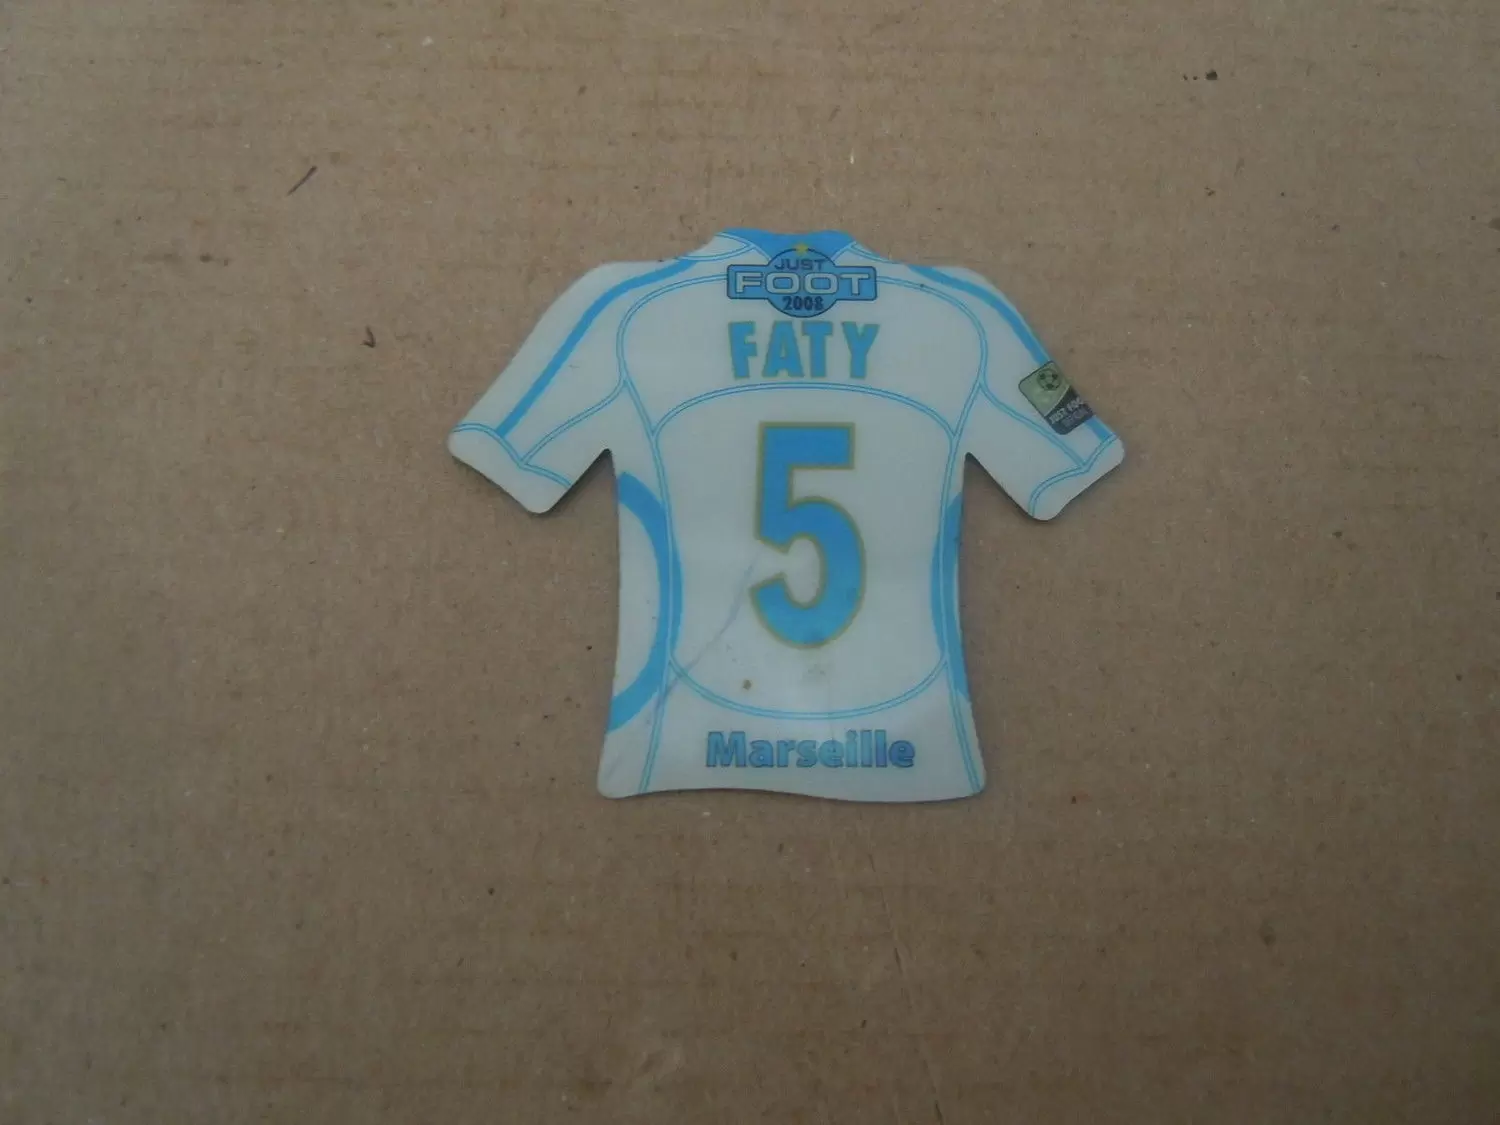 Just Foot 2008 - Marseille 5 - Faty